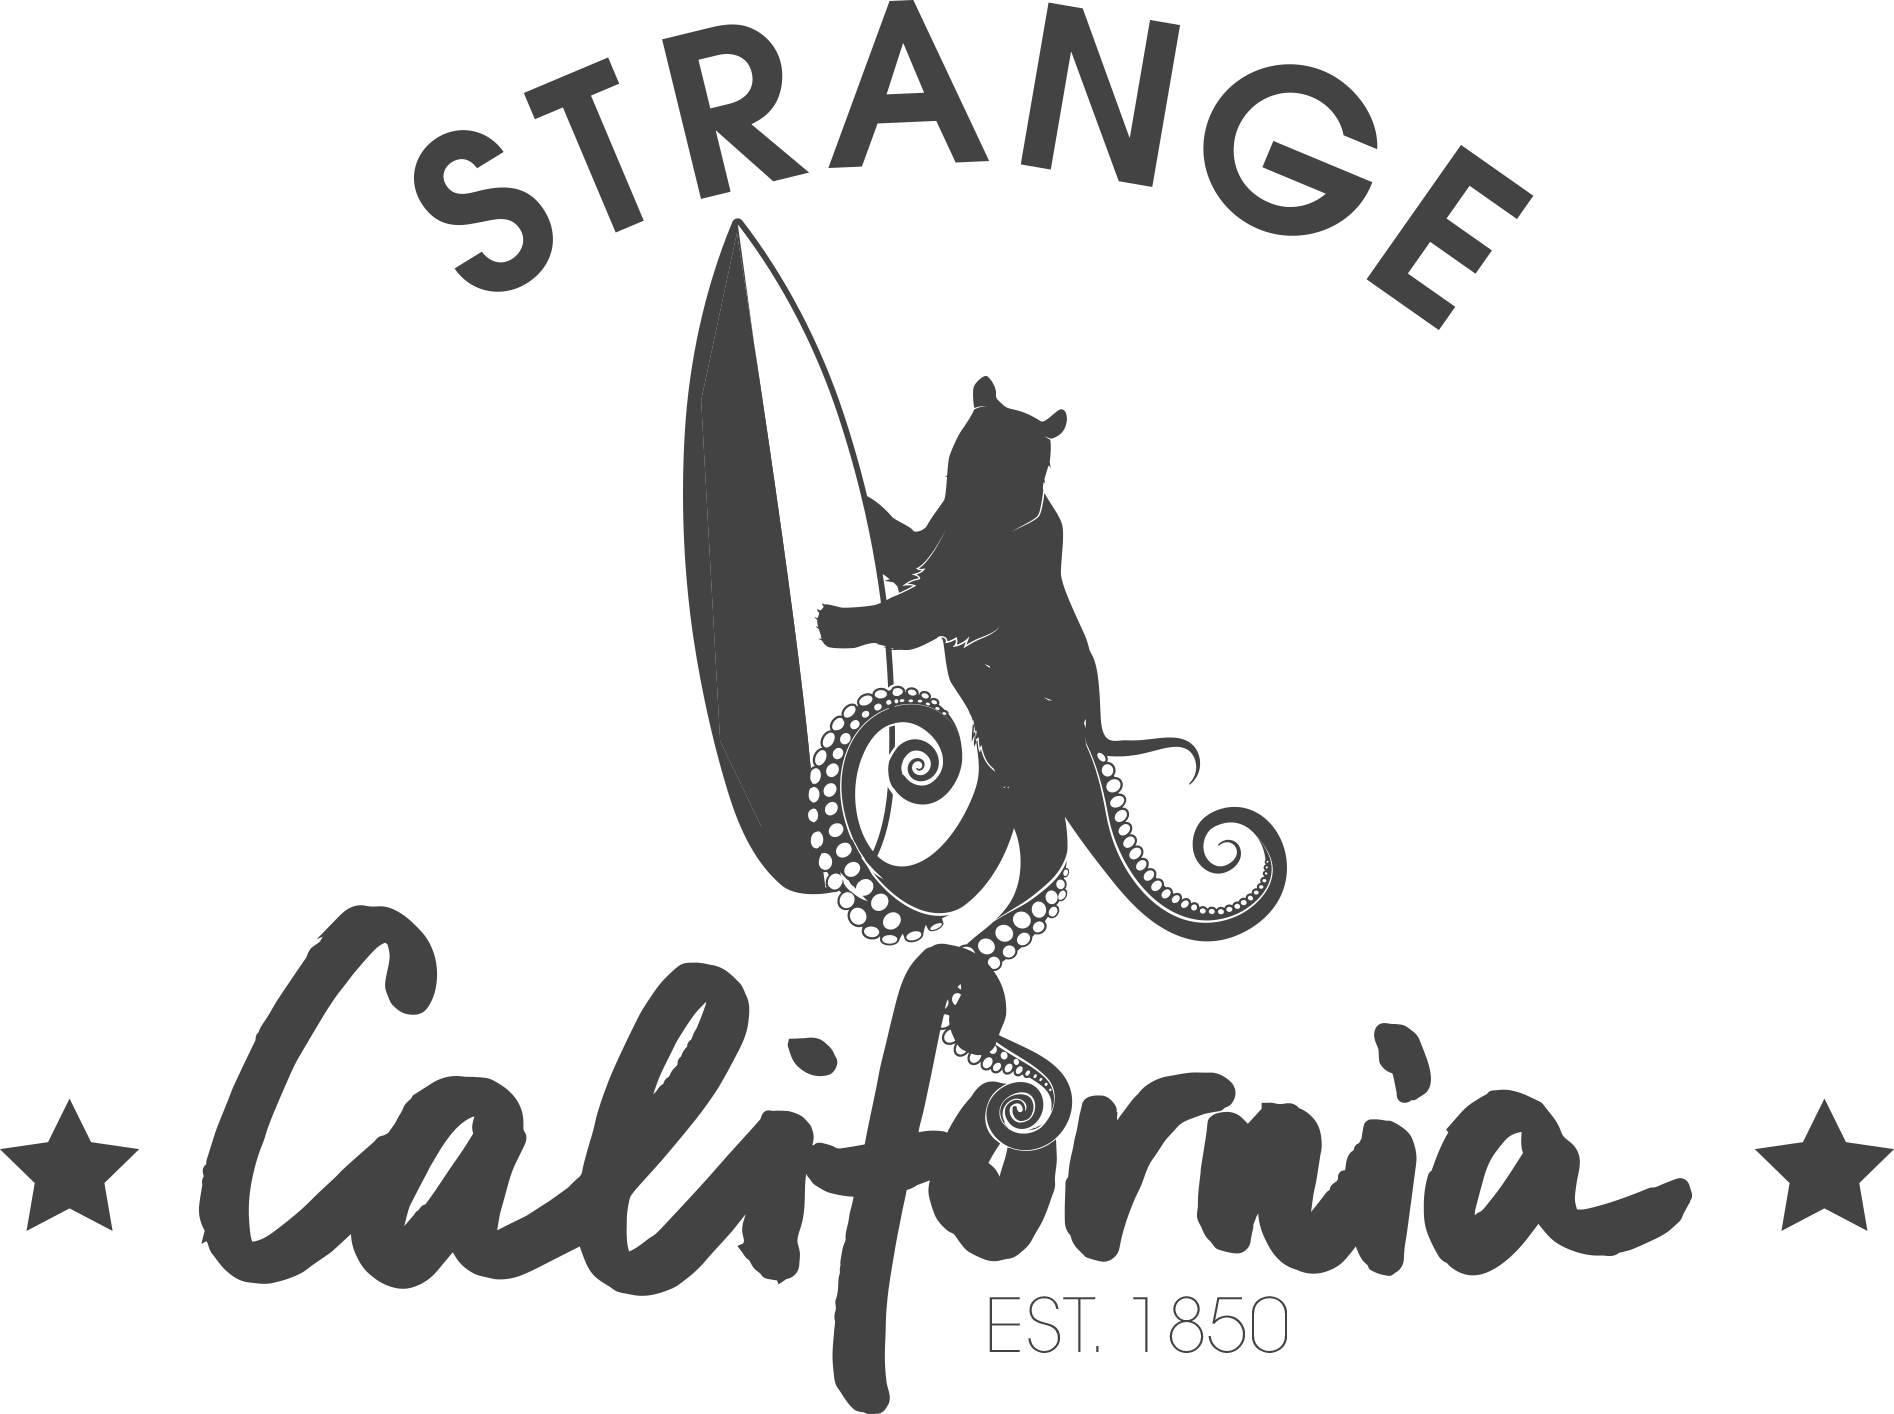 California Logo - Jason Batt - Strange California Logo and Kickstarter Marketing Tools